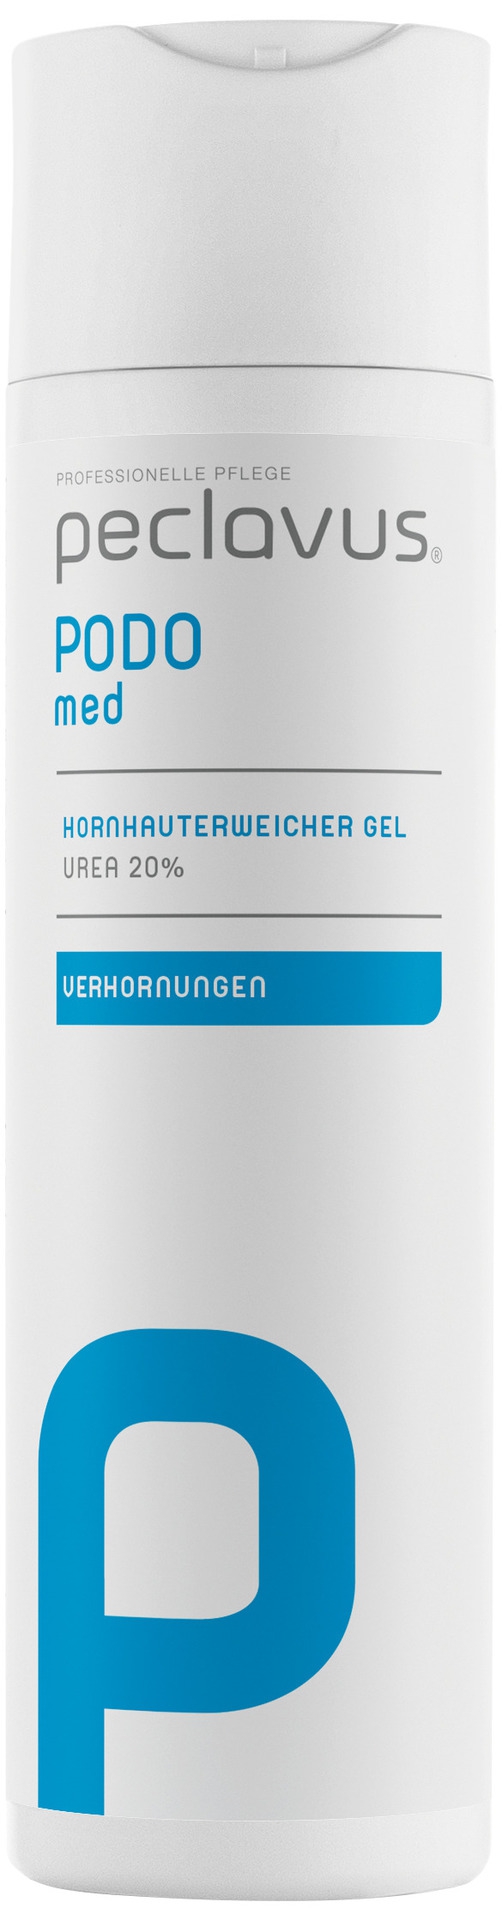 Peclavus PODOmed Hornhauterweicher Gel | 250 ml